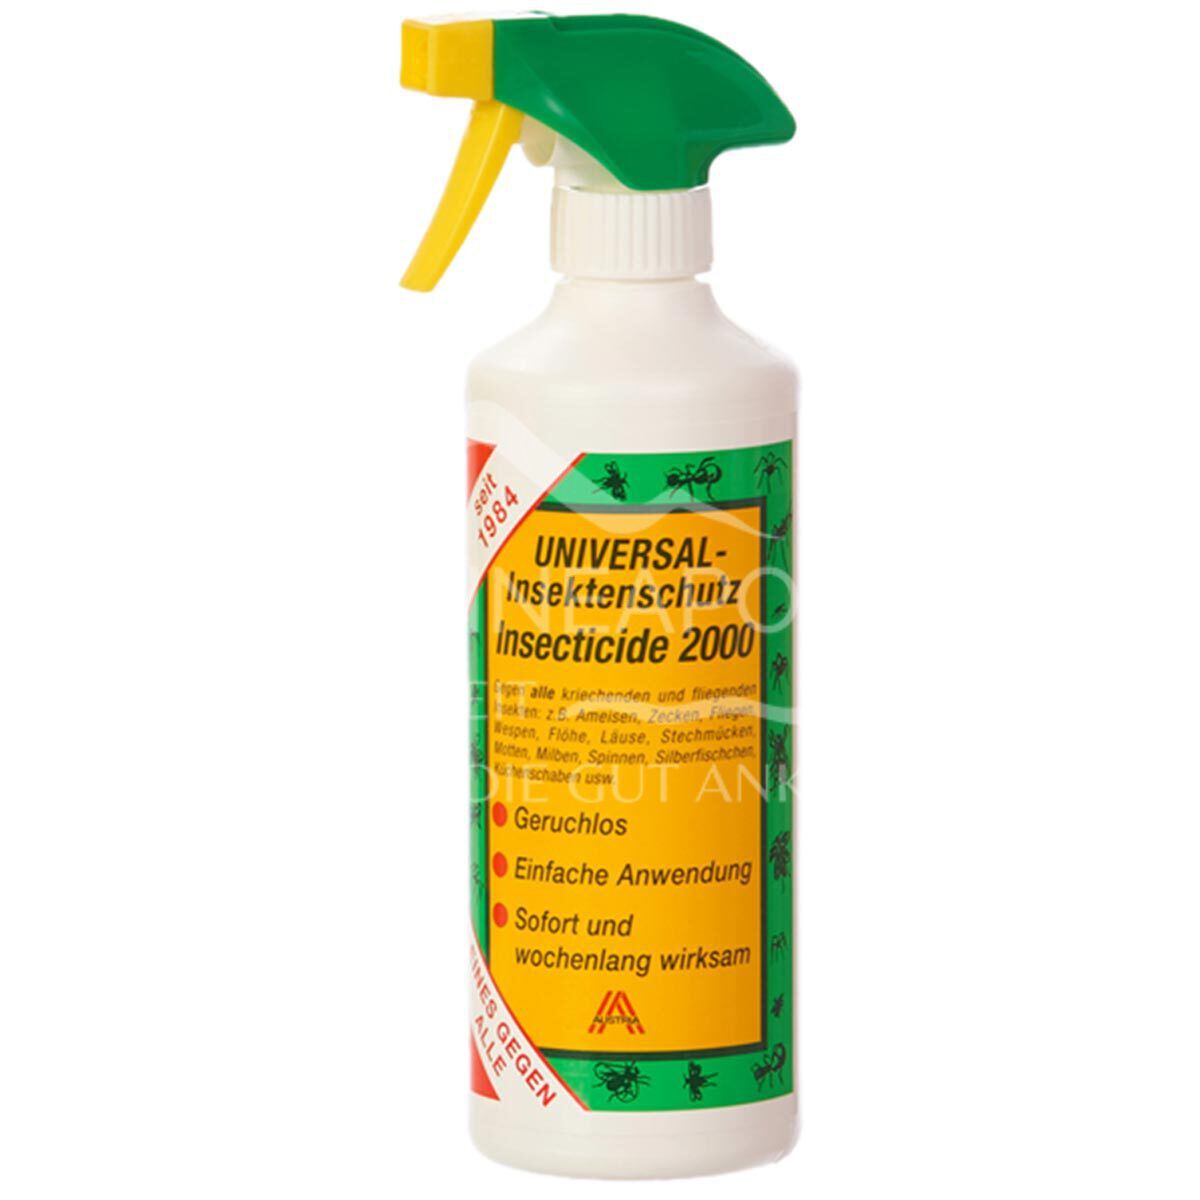 Universal-Insektenschutz Insecticide 2000 Spray